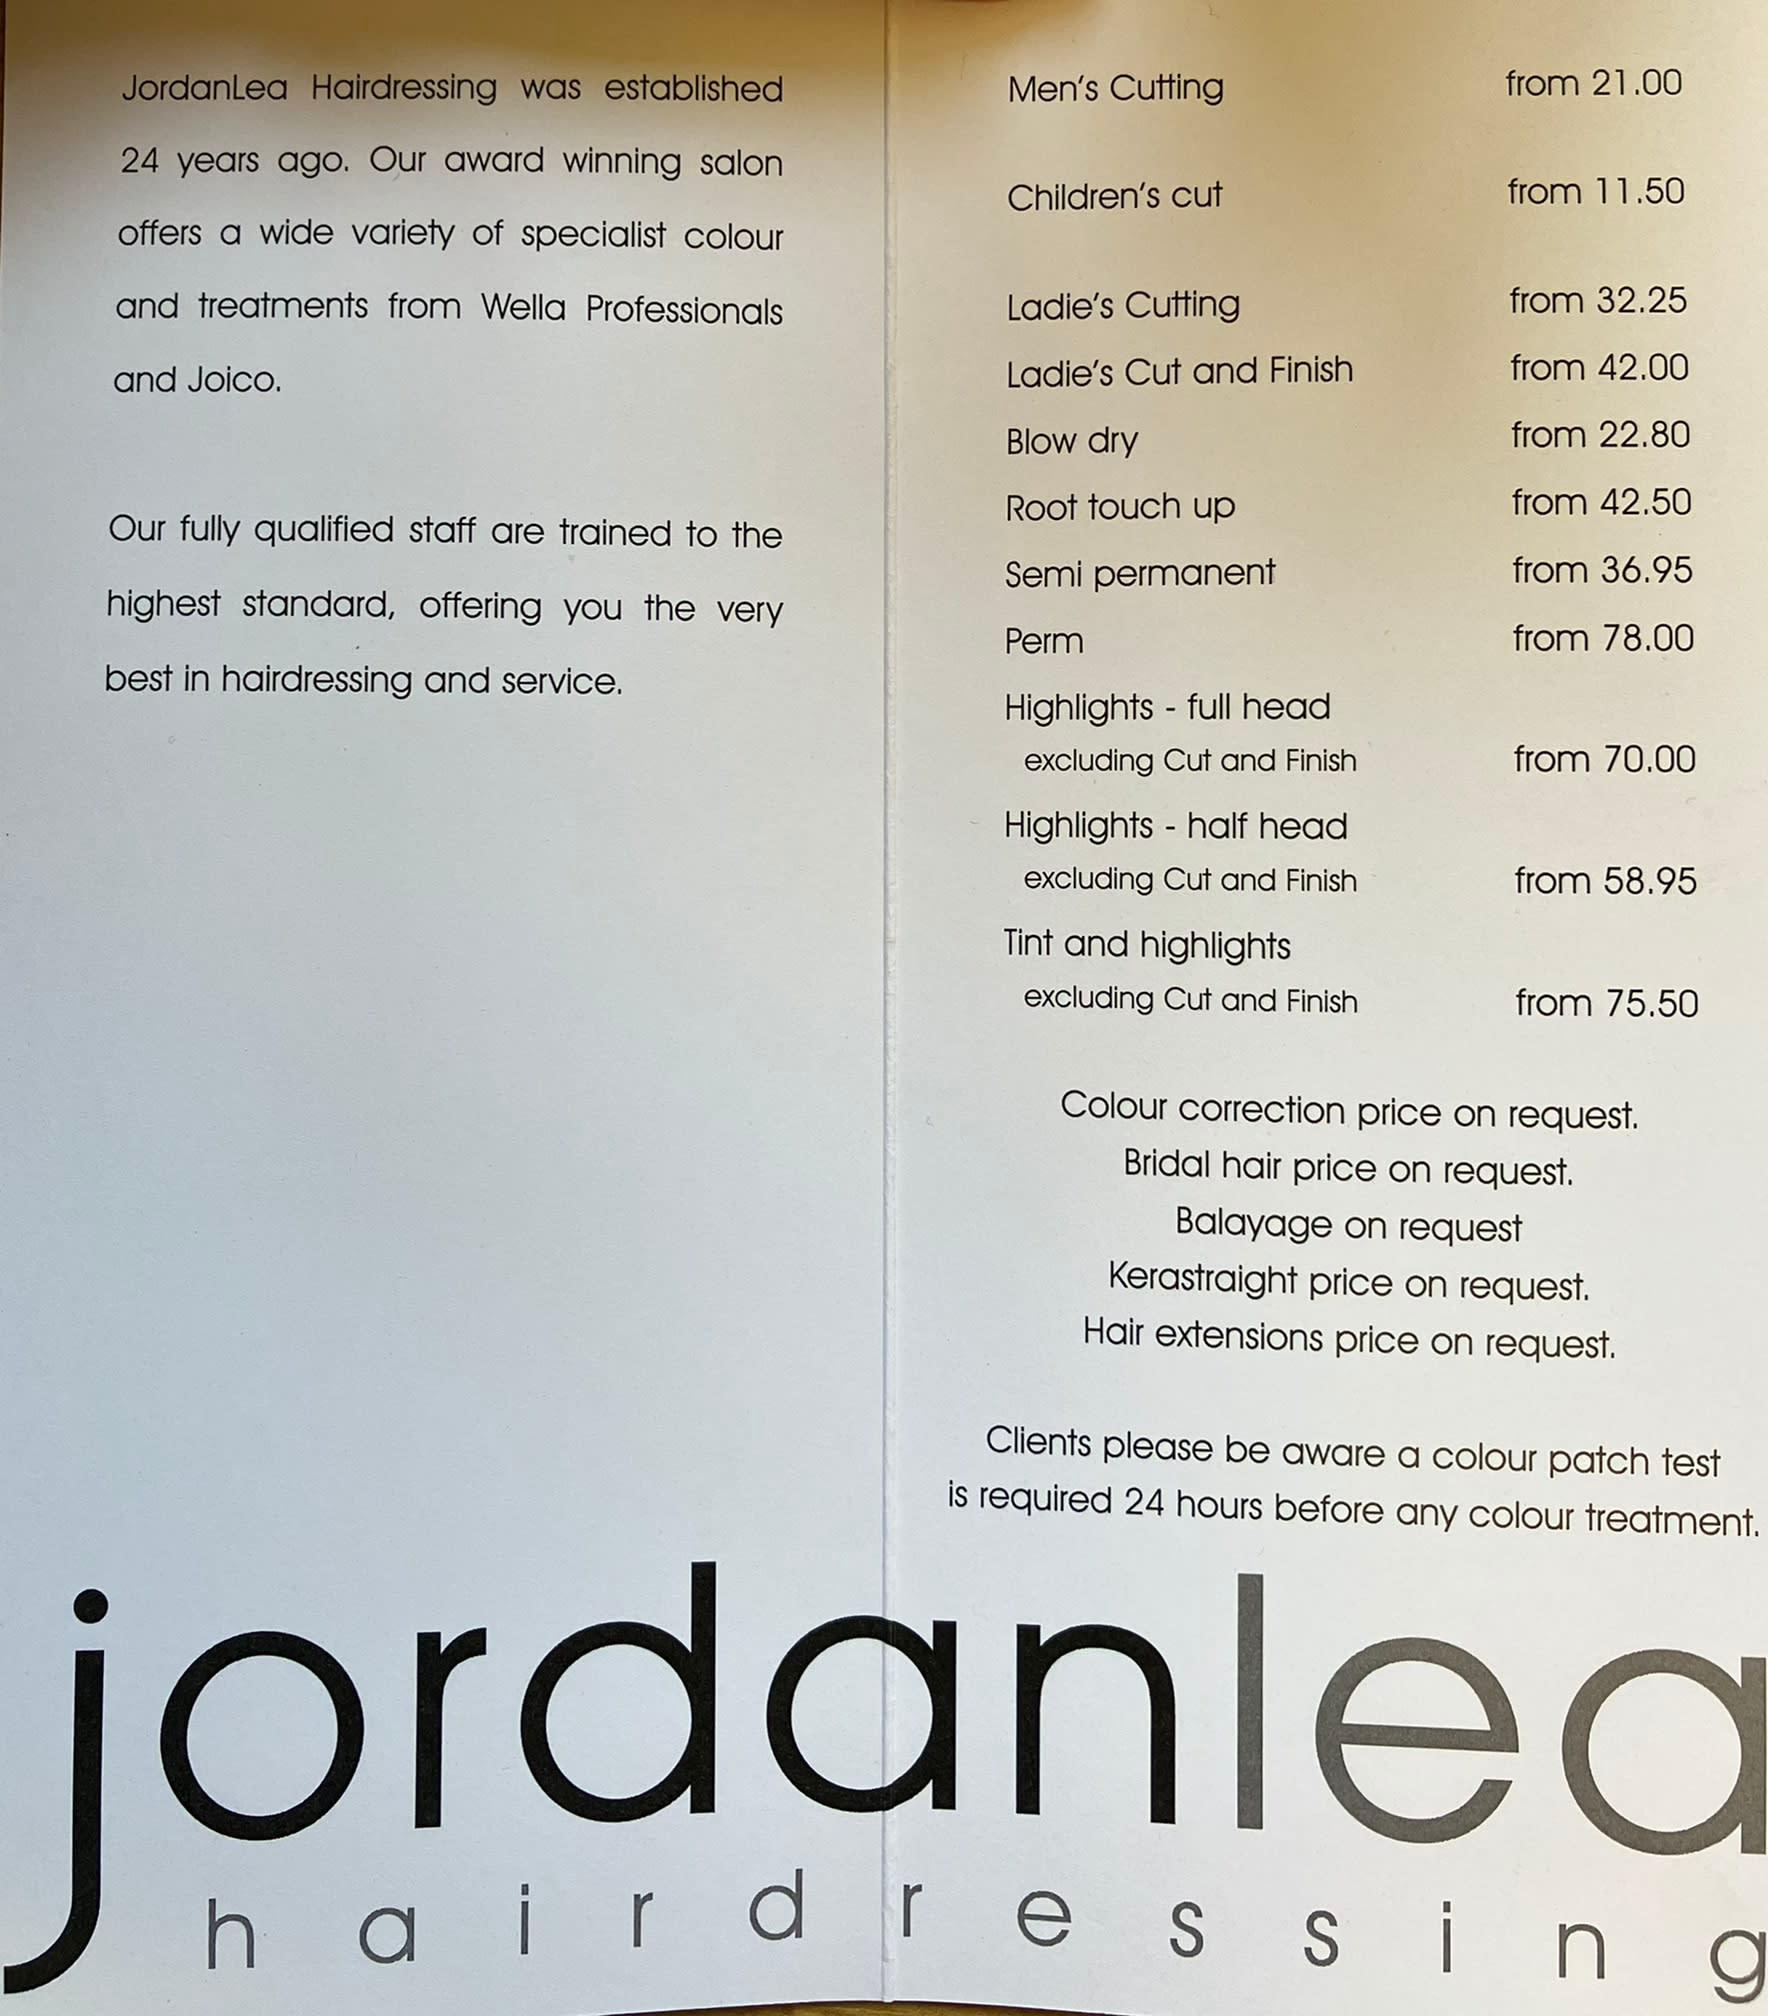 Jordan Lea Hairdressing Cheadle 01614 372423